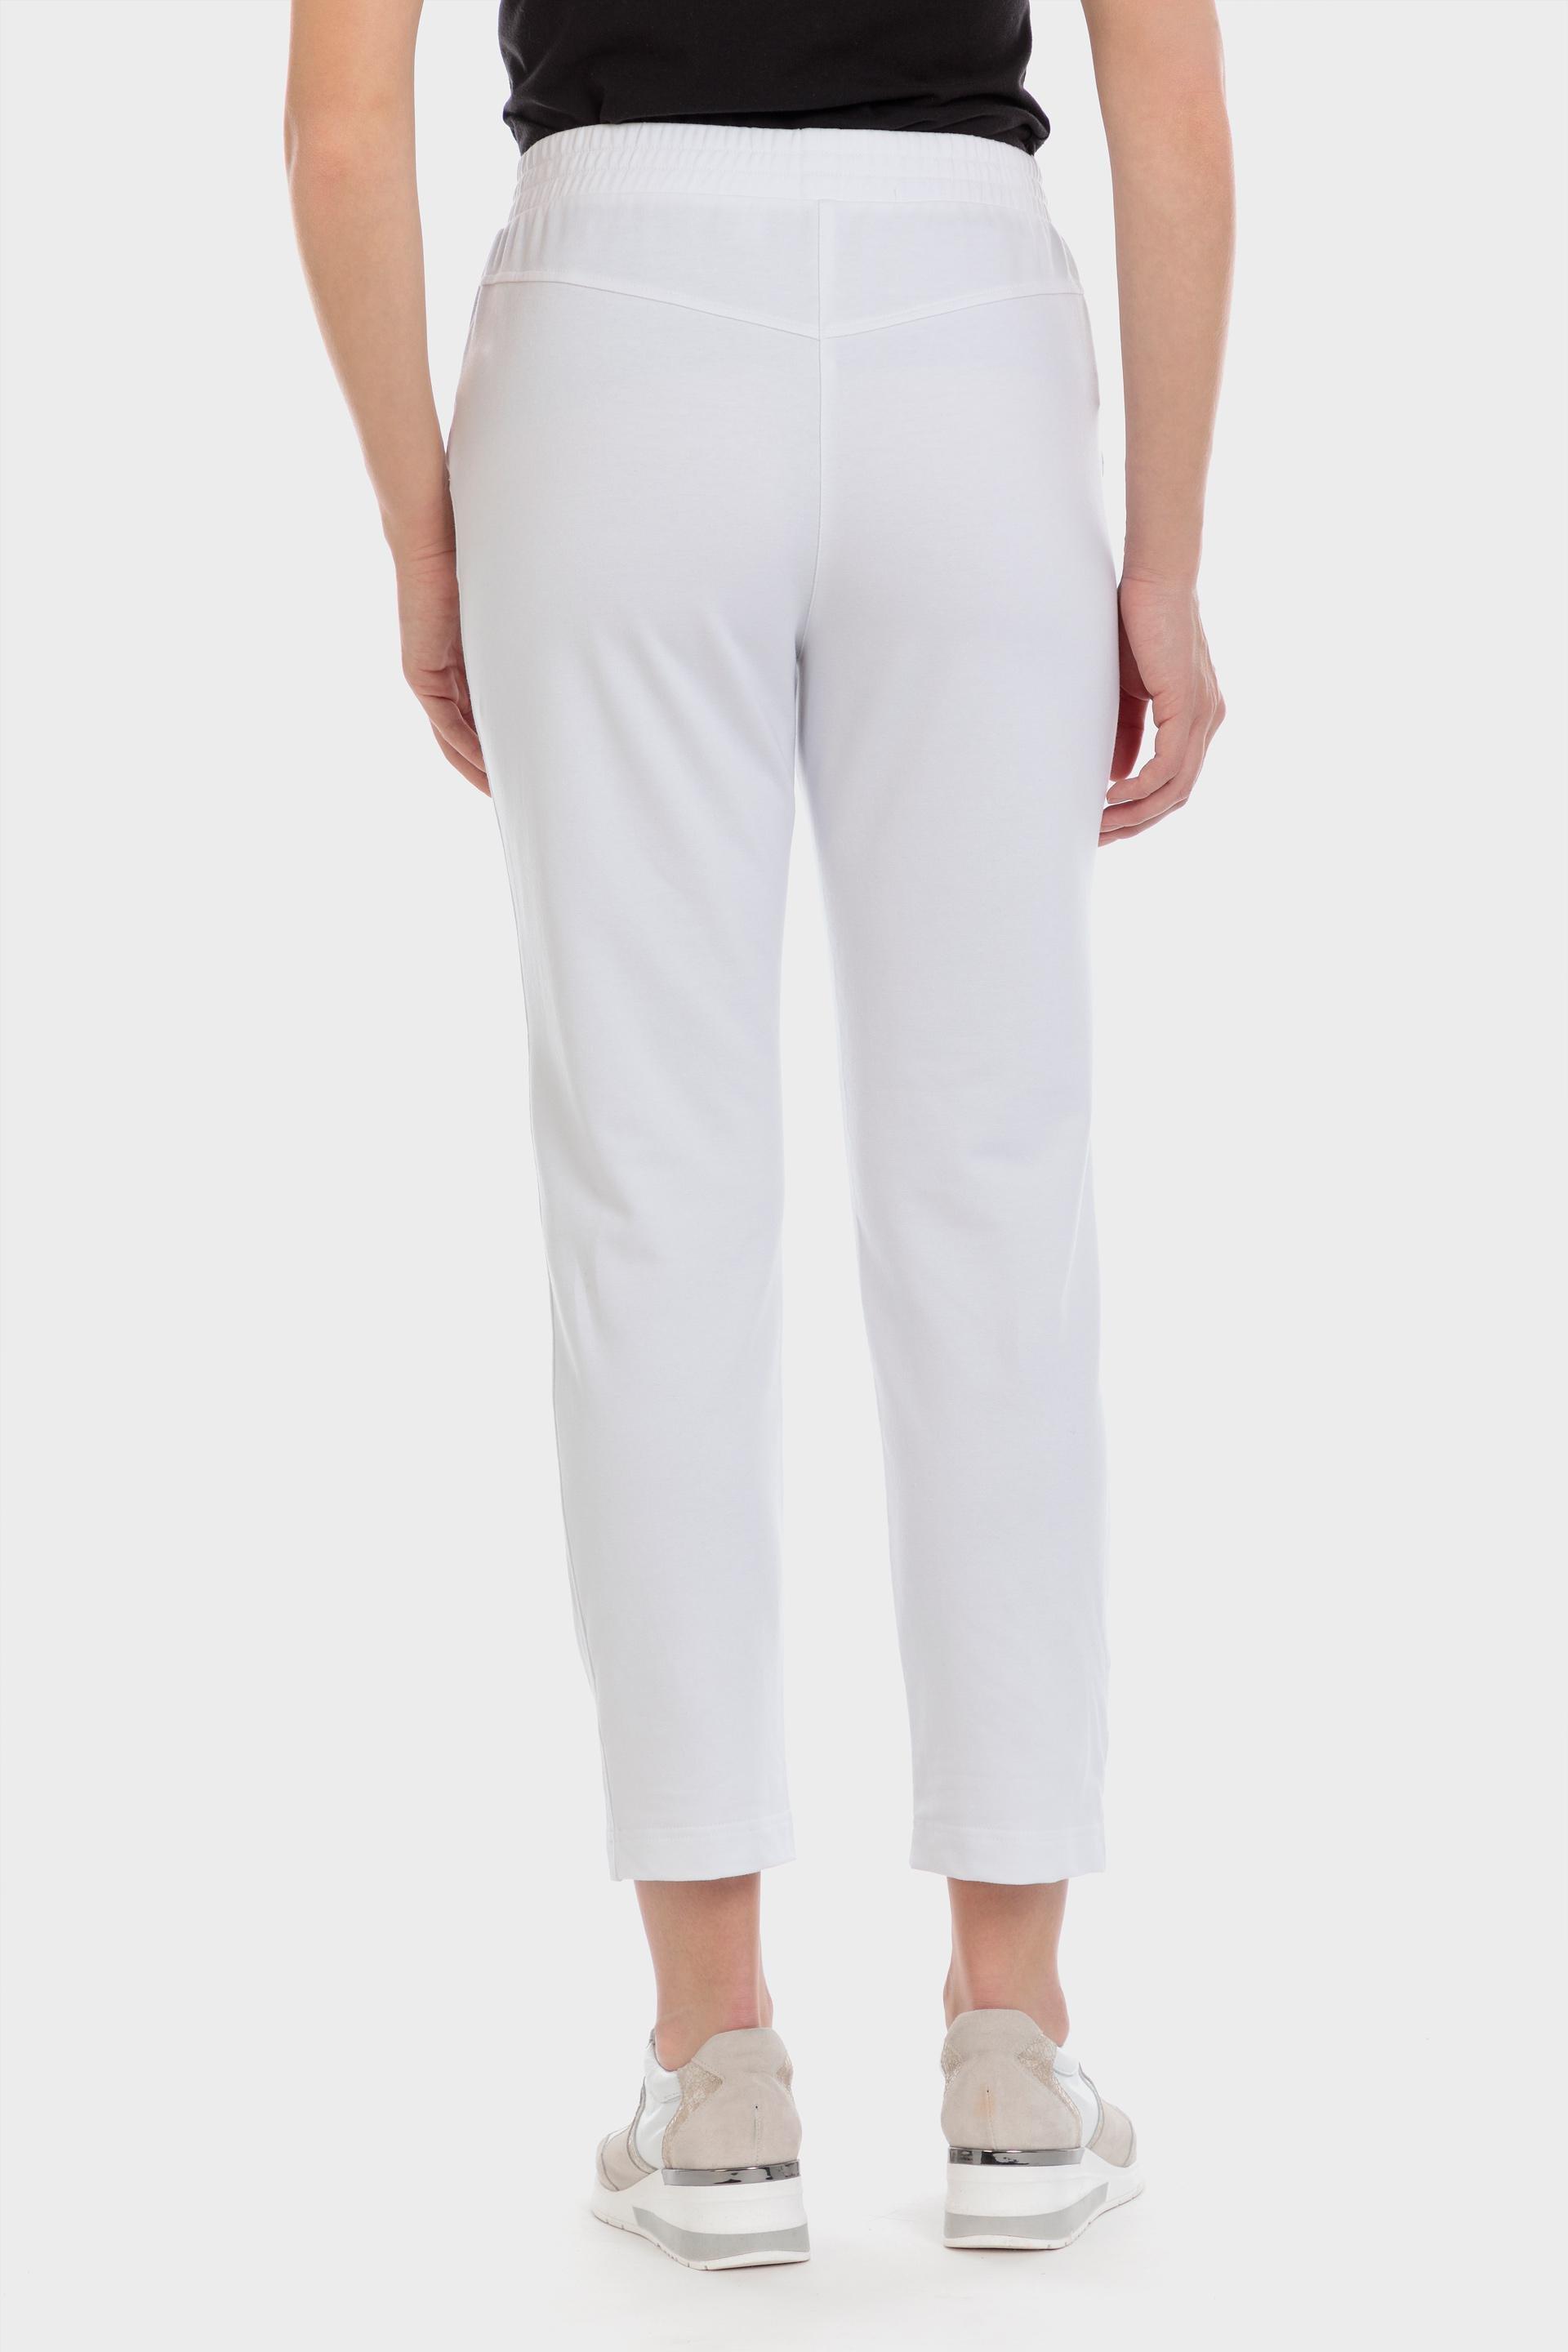 Punt Roma - White Elastic Waist Trousers